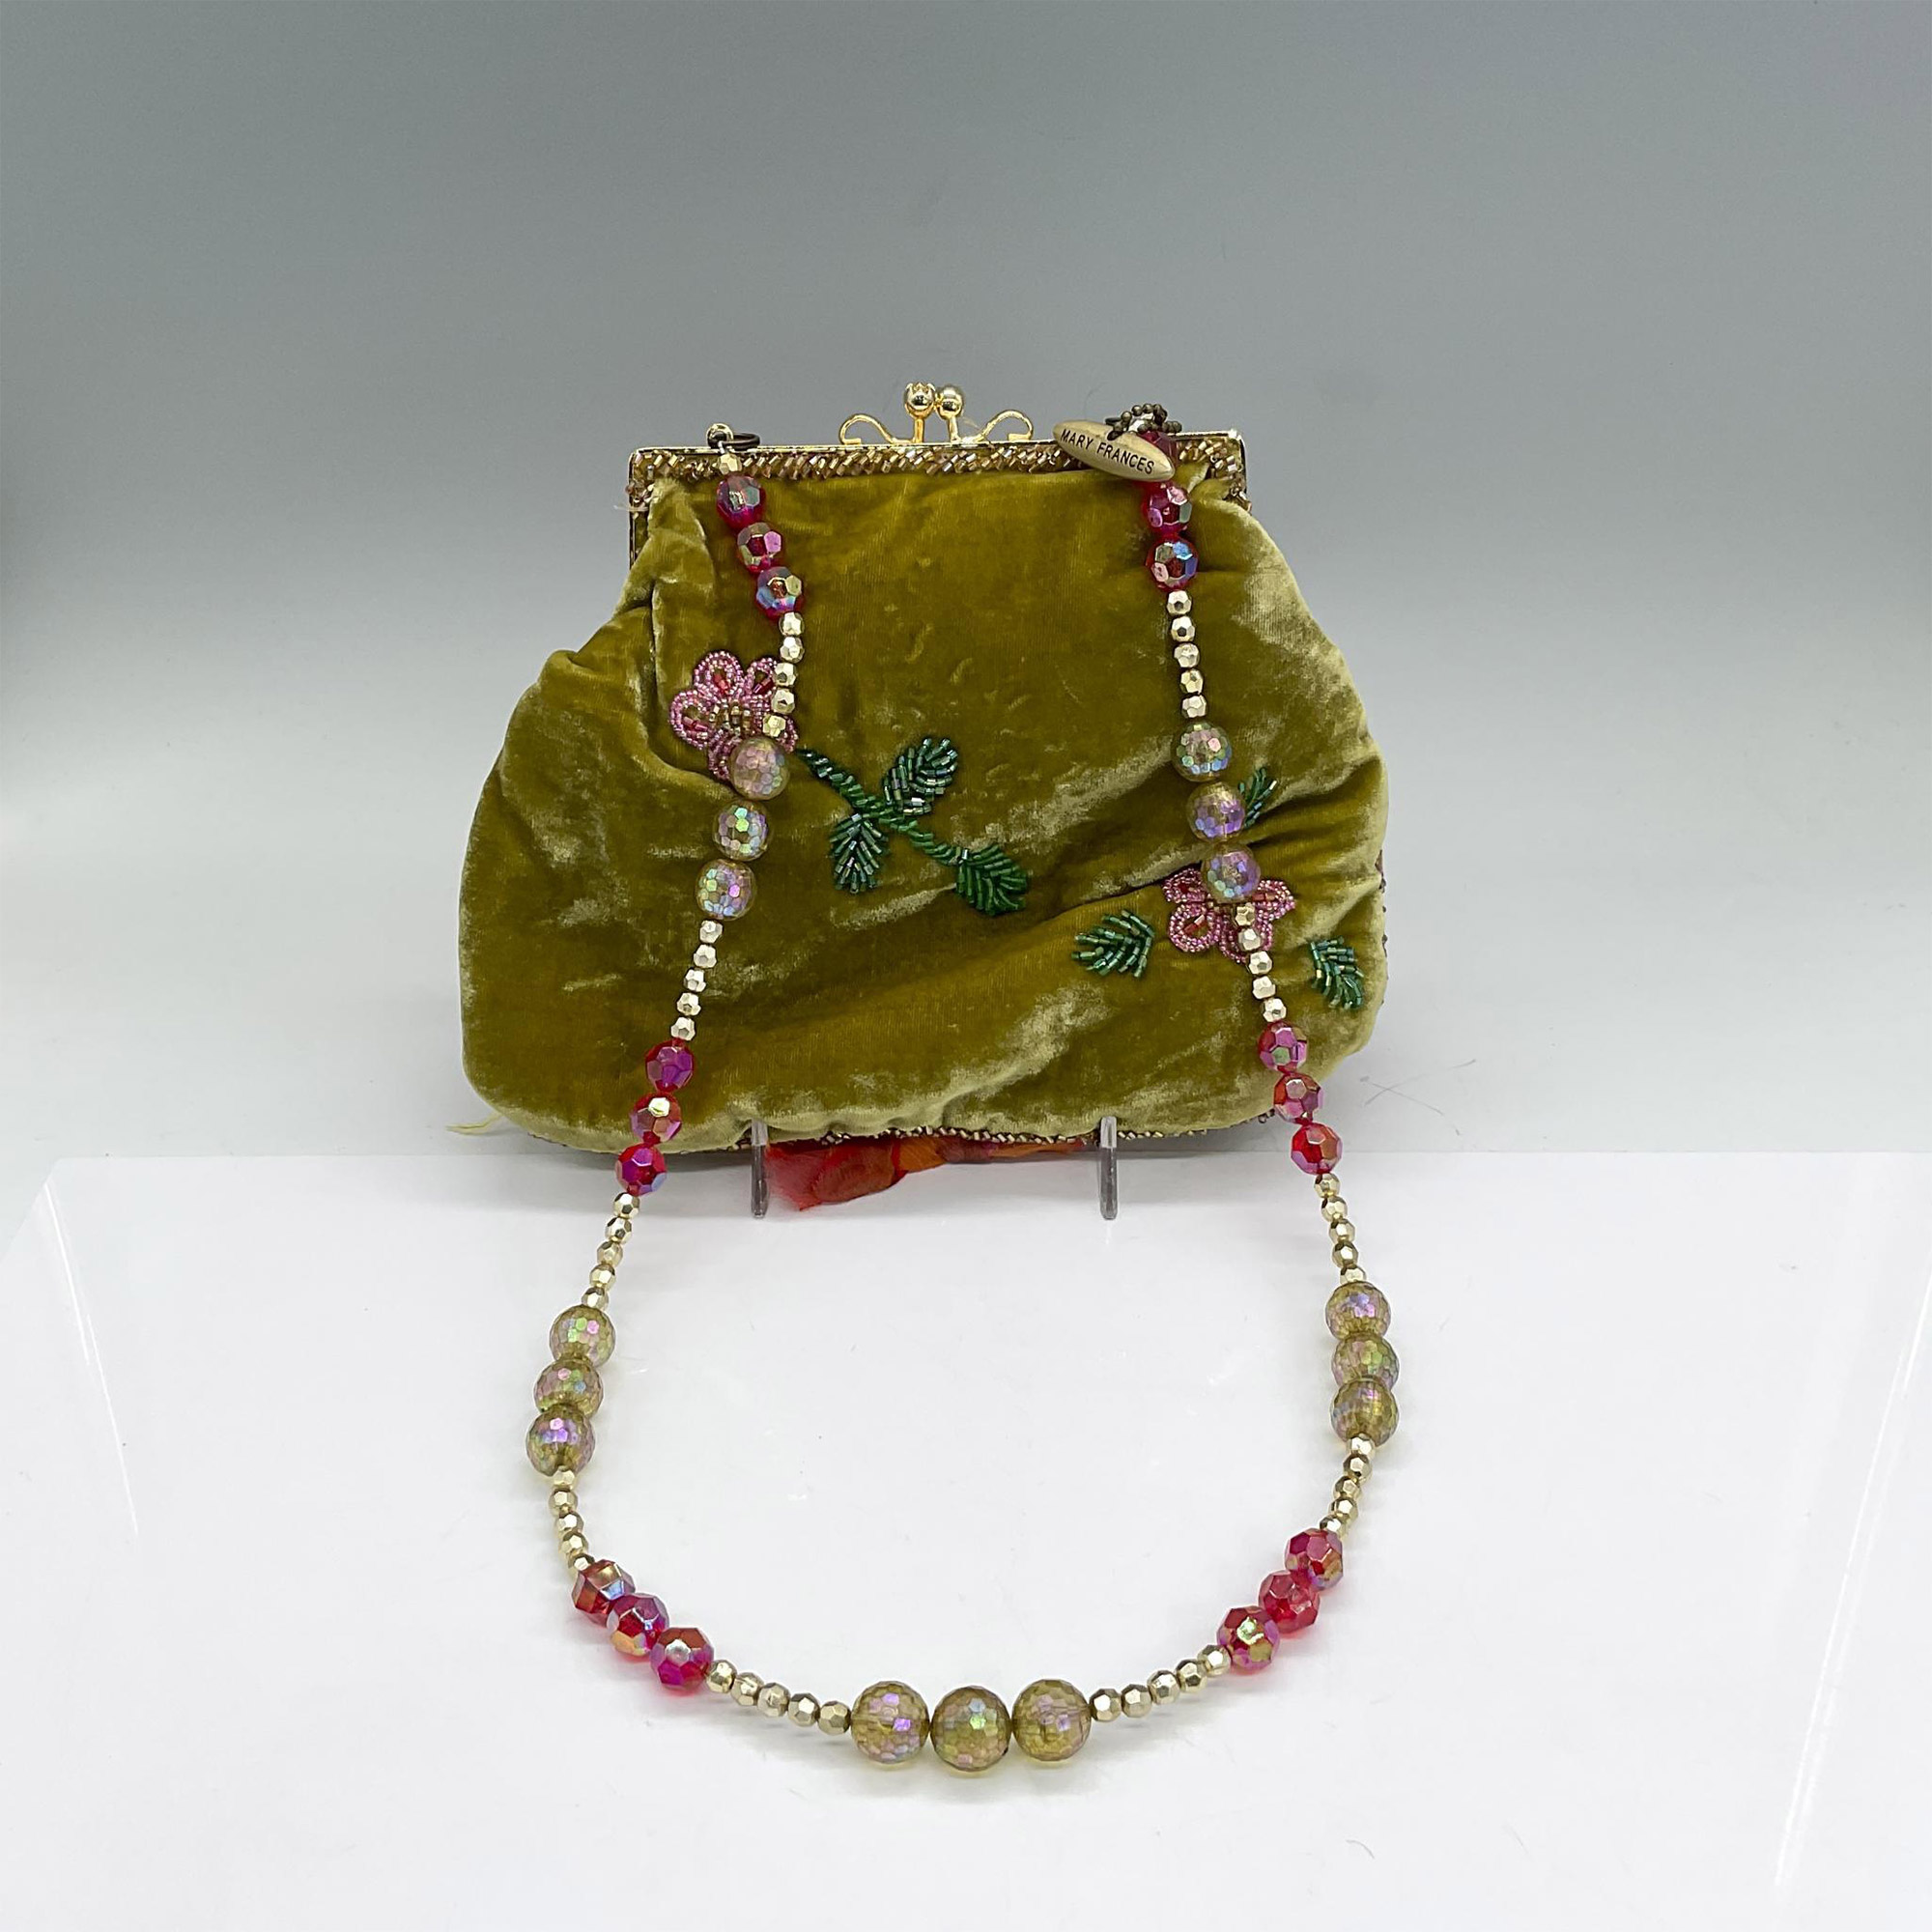 Mary Frances Velvet and Silk Handbag, Olive/Orange/Fuchsia - Image 2 of 3